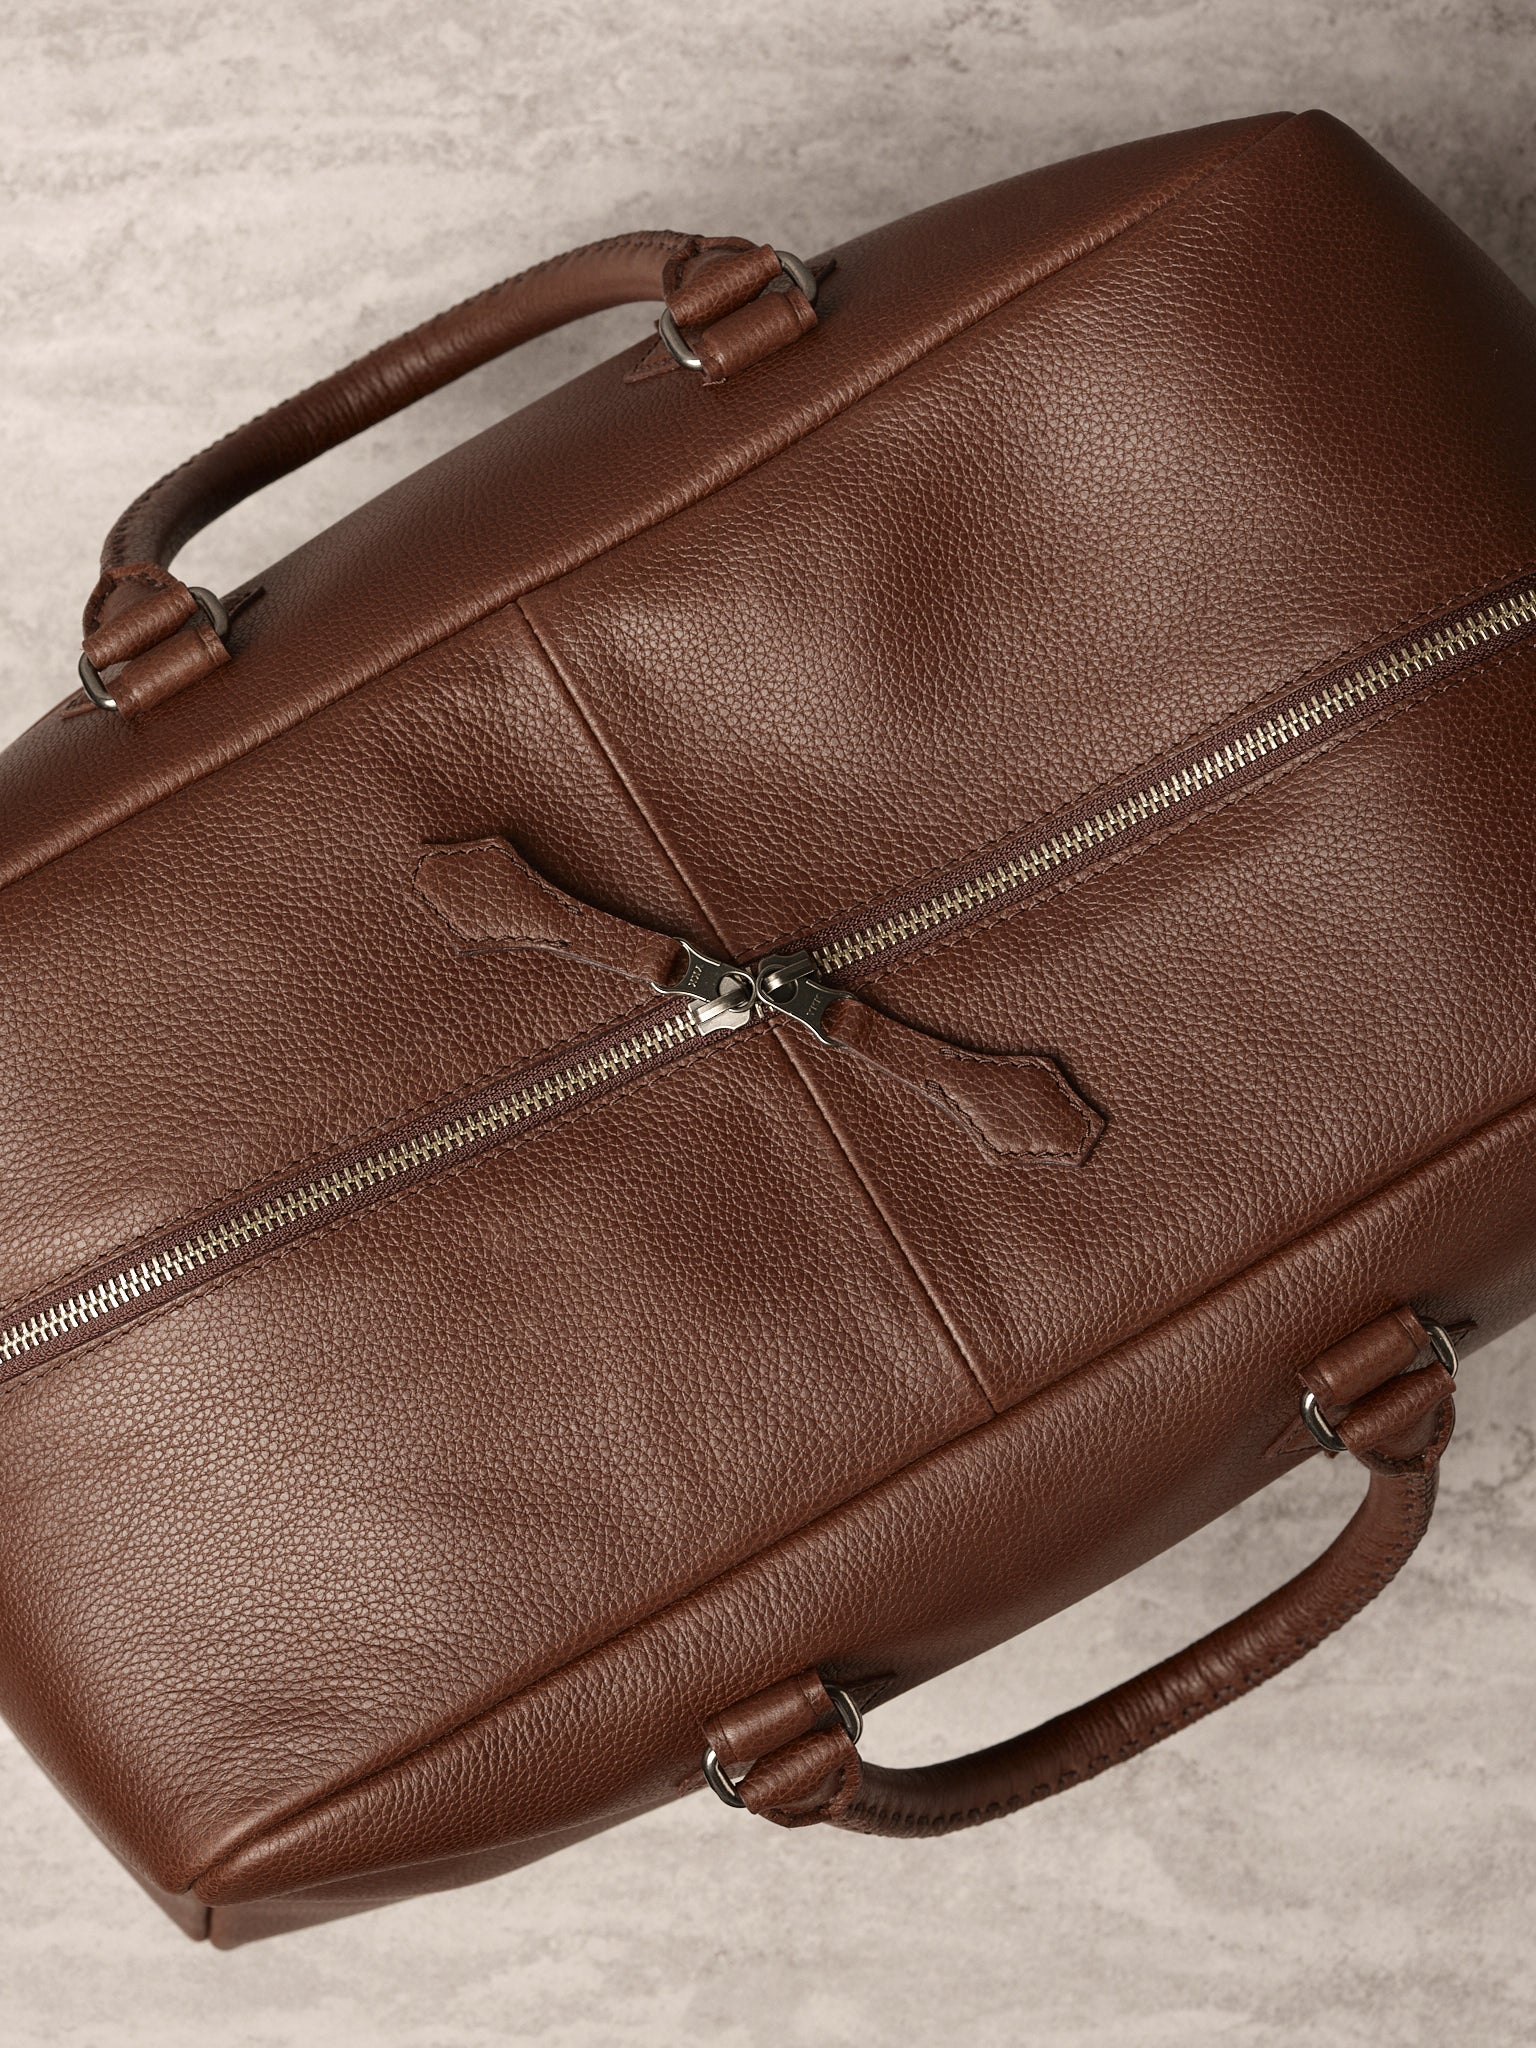 Leather Pull Tabs. Best Weekender Bag Brown by Capra Leather